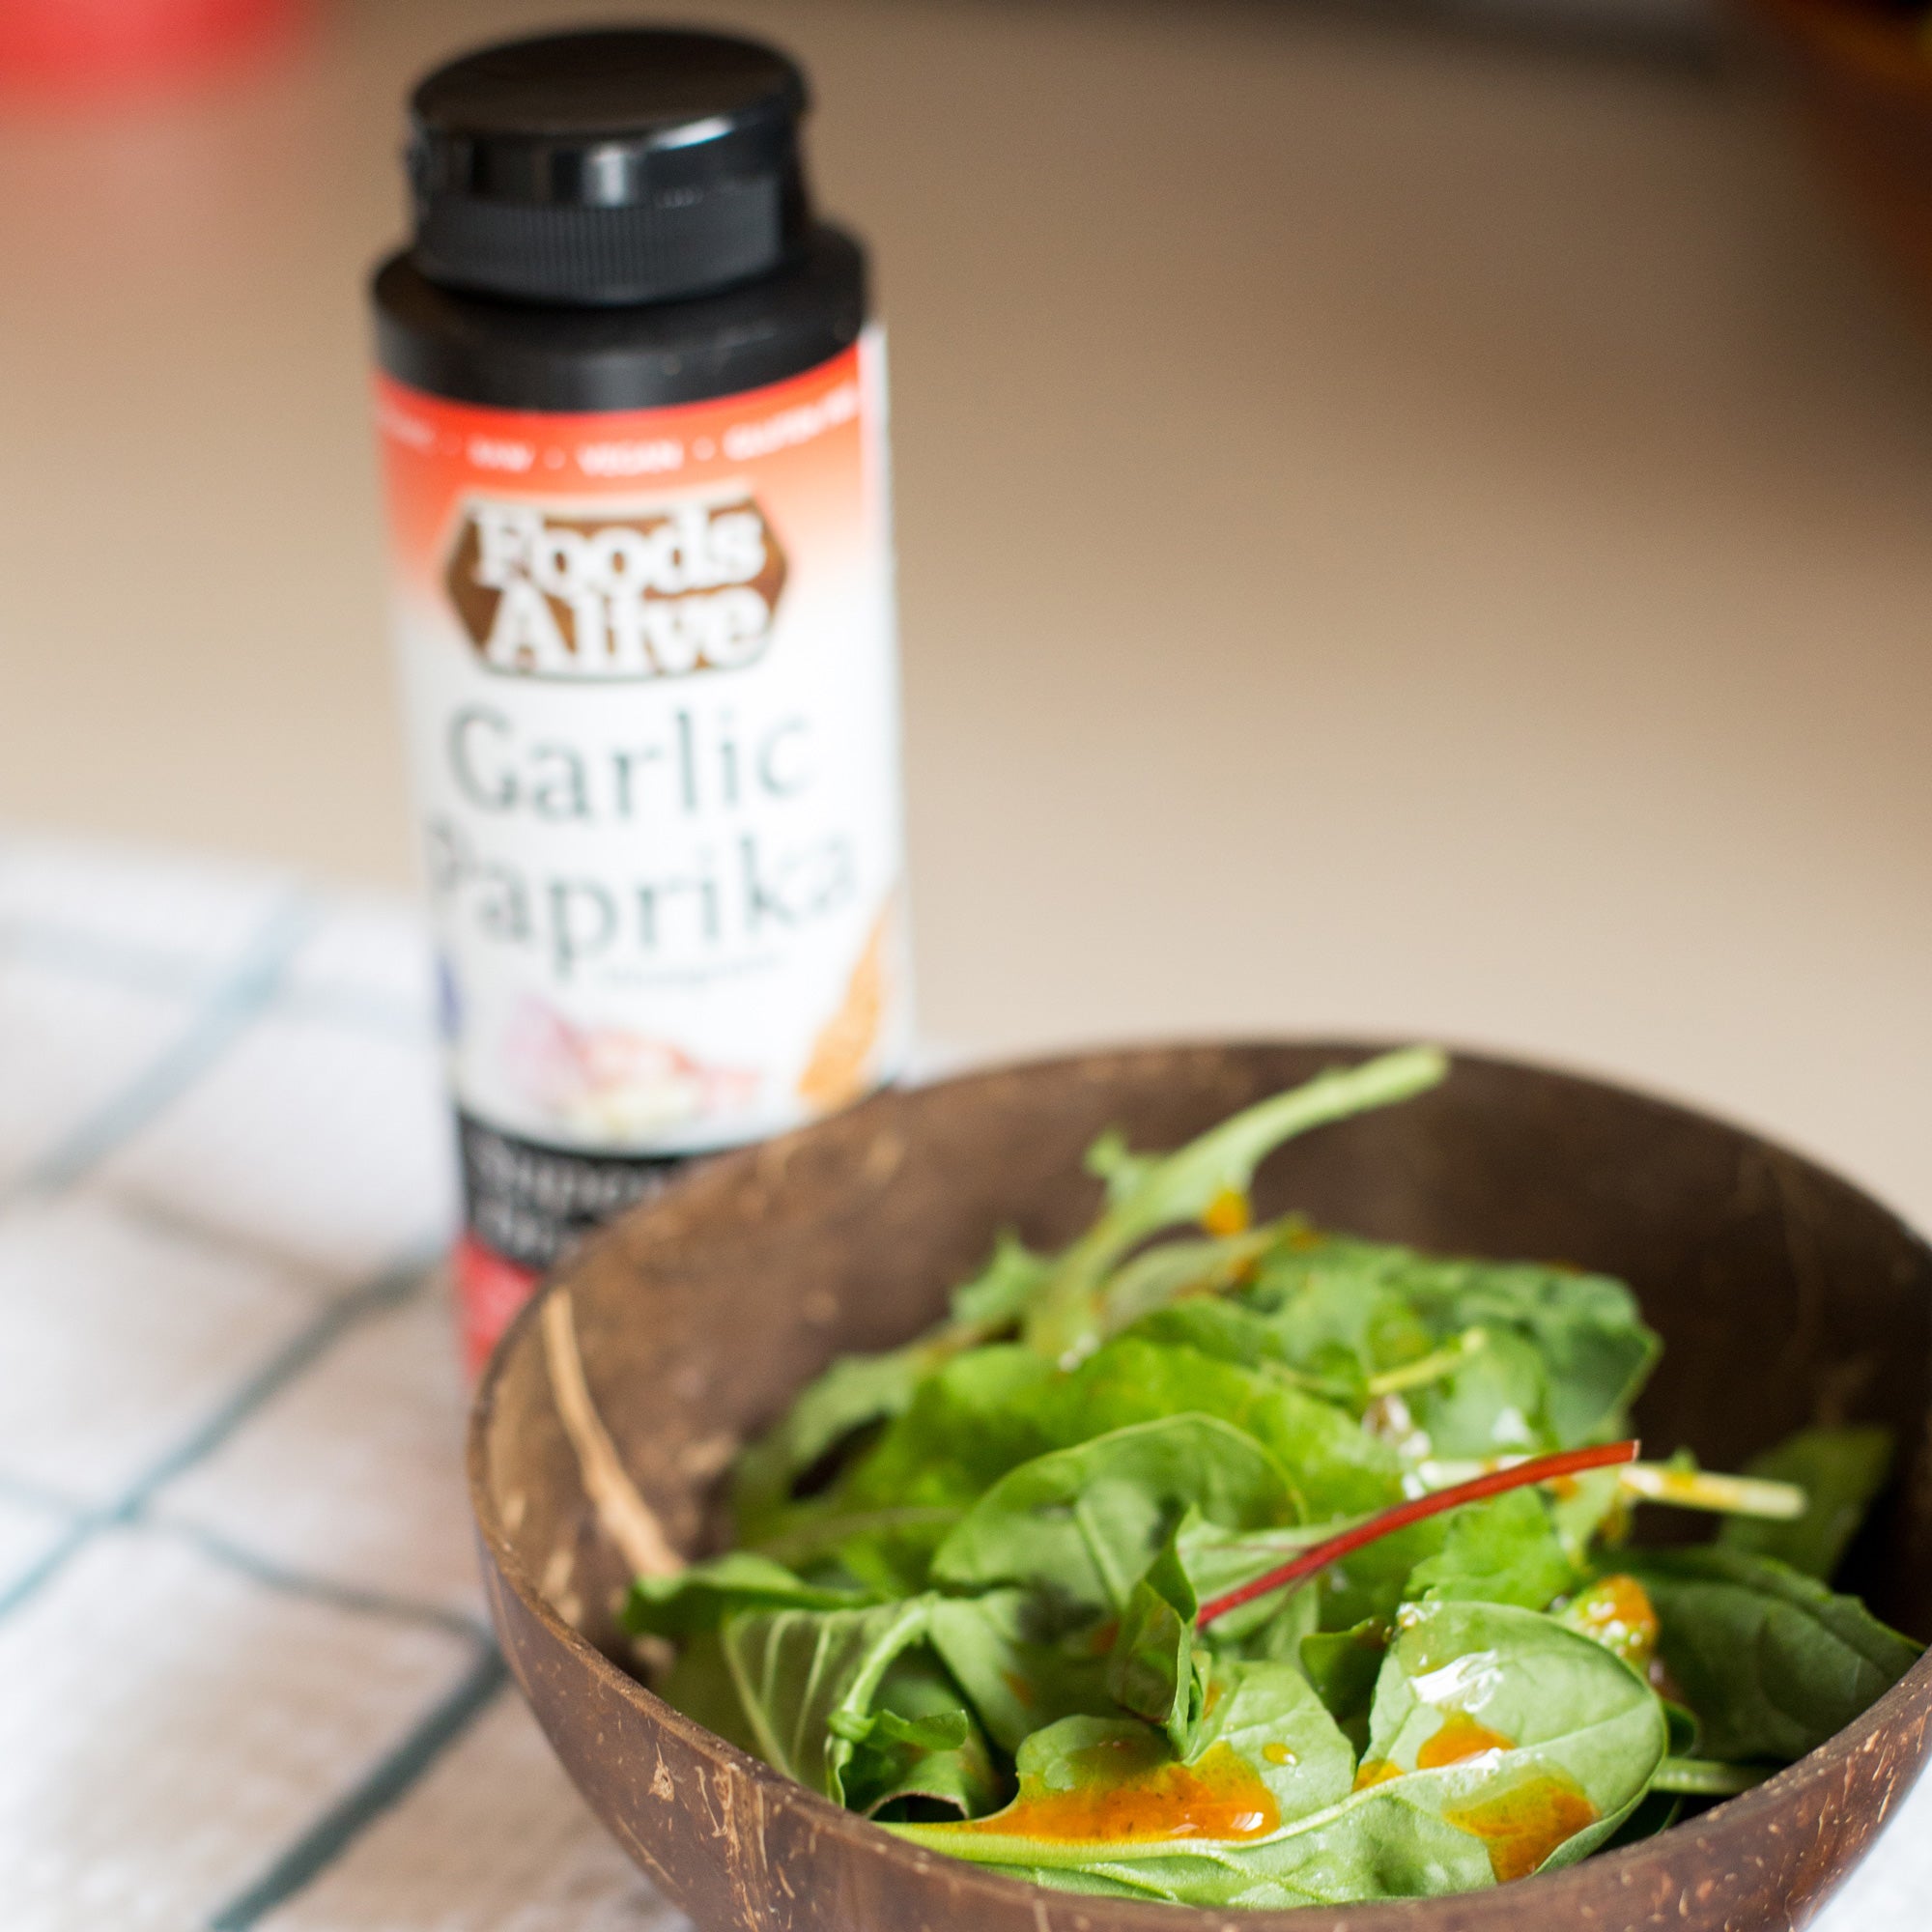 Organic Garlic Paprika Salad Dressing | Artisan, Cold-Pressed Golden Flax Oil | Raw, Vegan, Gluten Free, Kosher, Non-GMO | Foods Alive